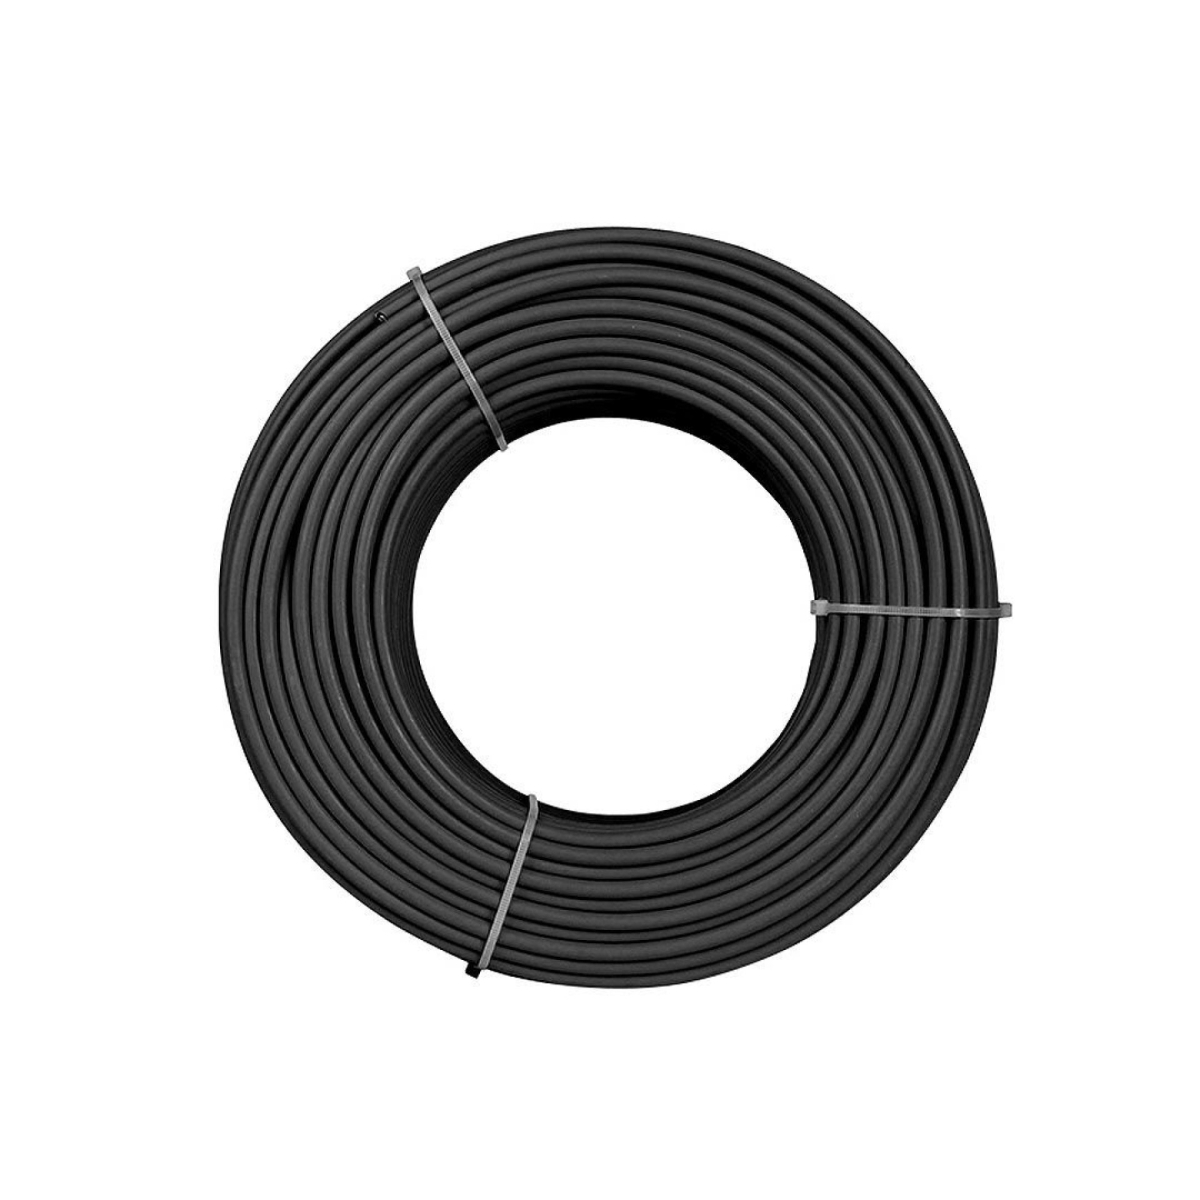 TommaTech 4.0 mm Solar Cable PVI1-F Black